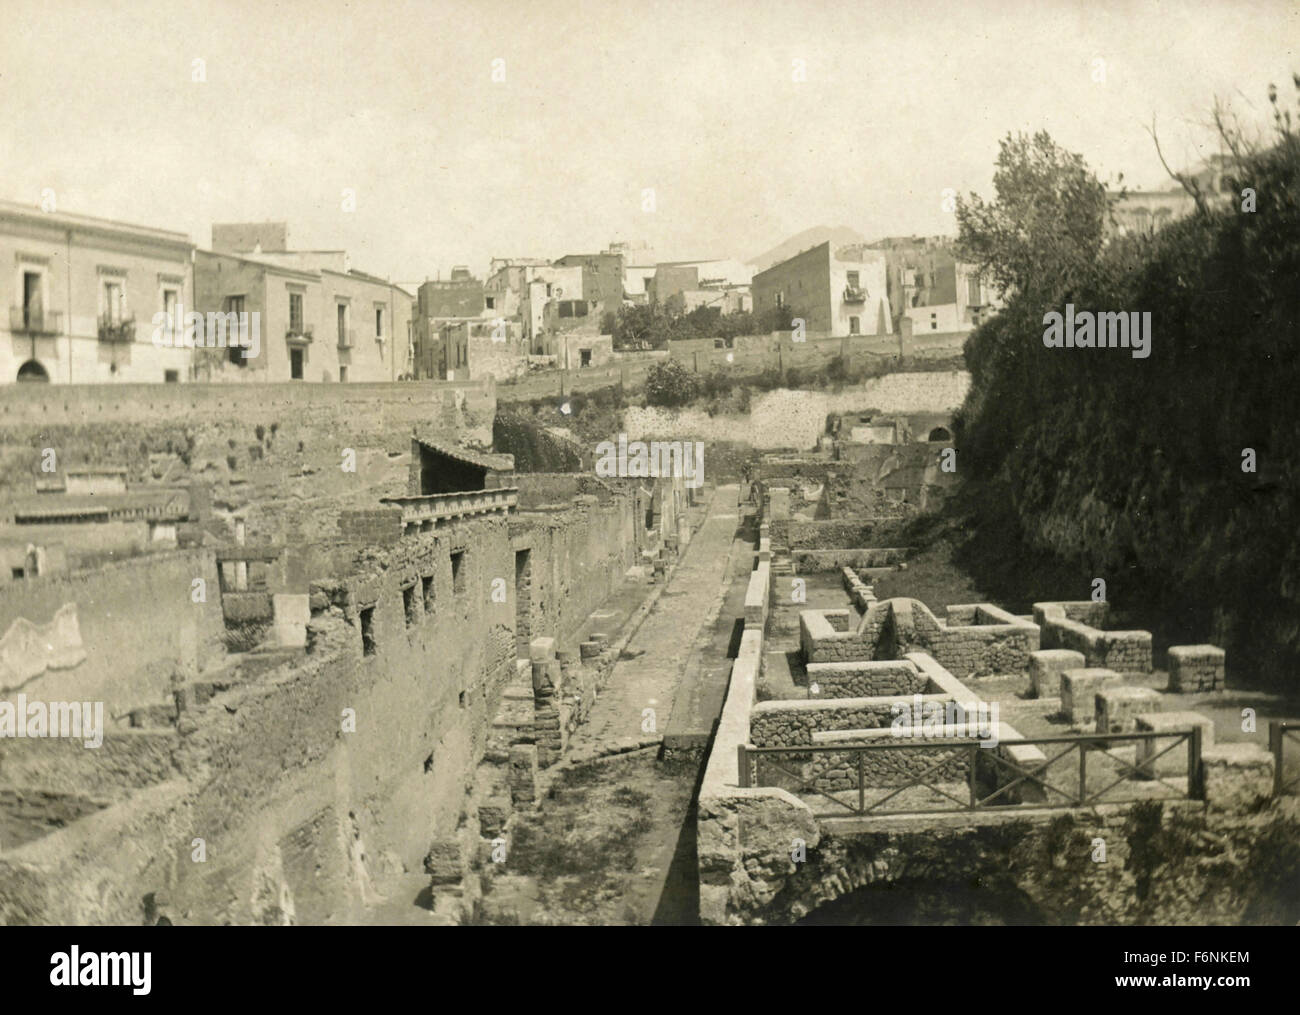 Casas romanas fotografías e imágenes de alta resolución - Alamy